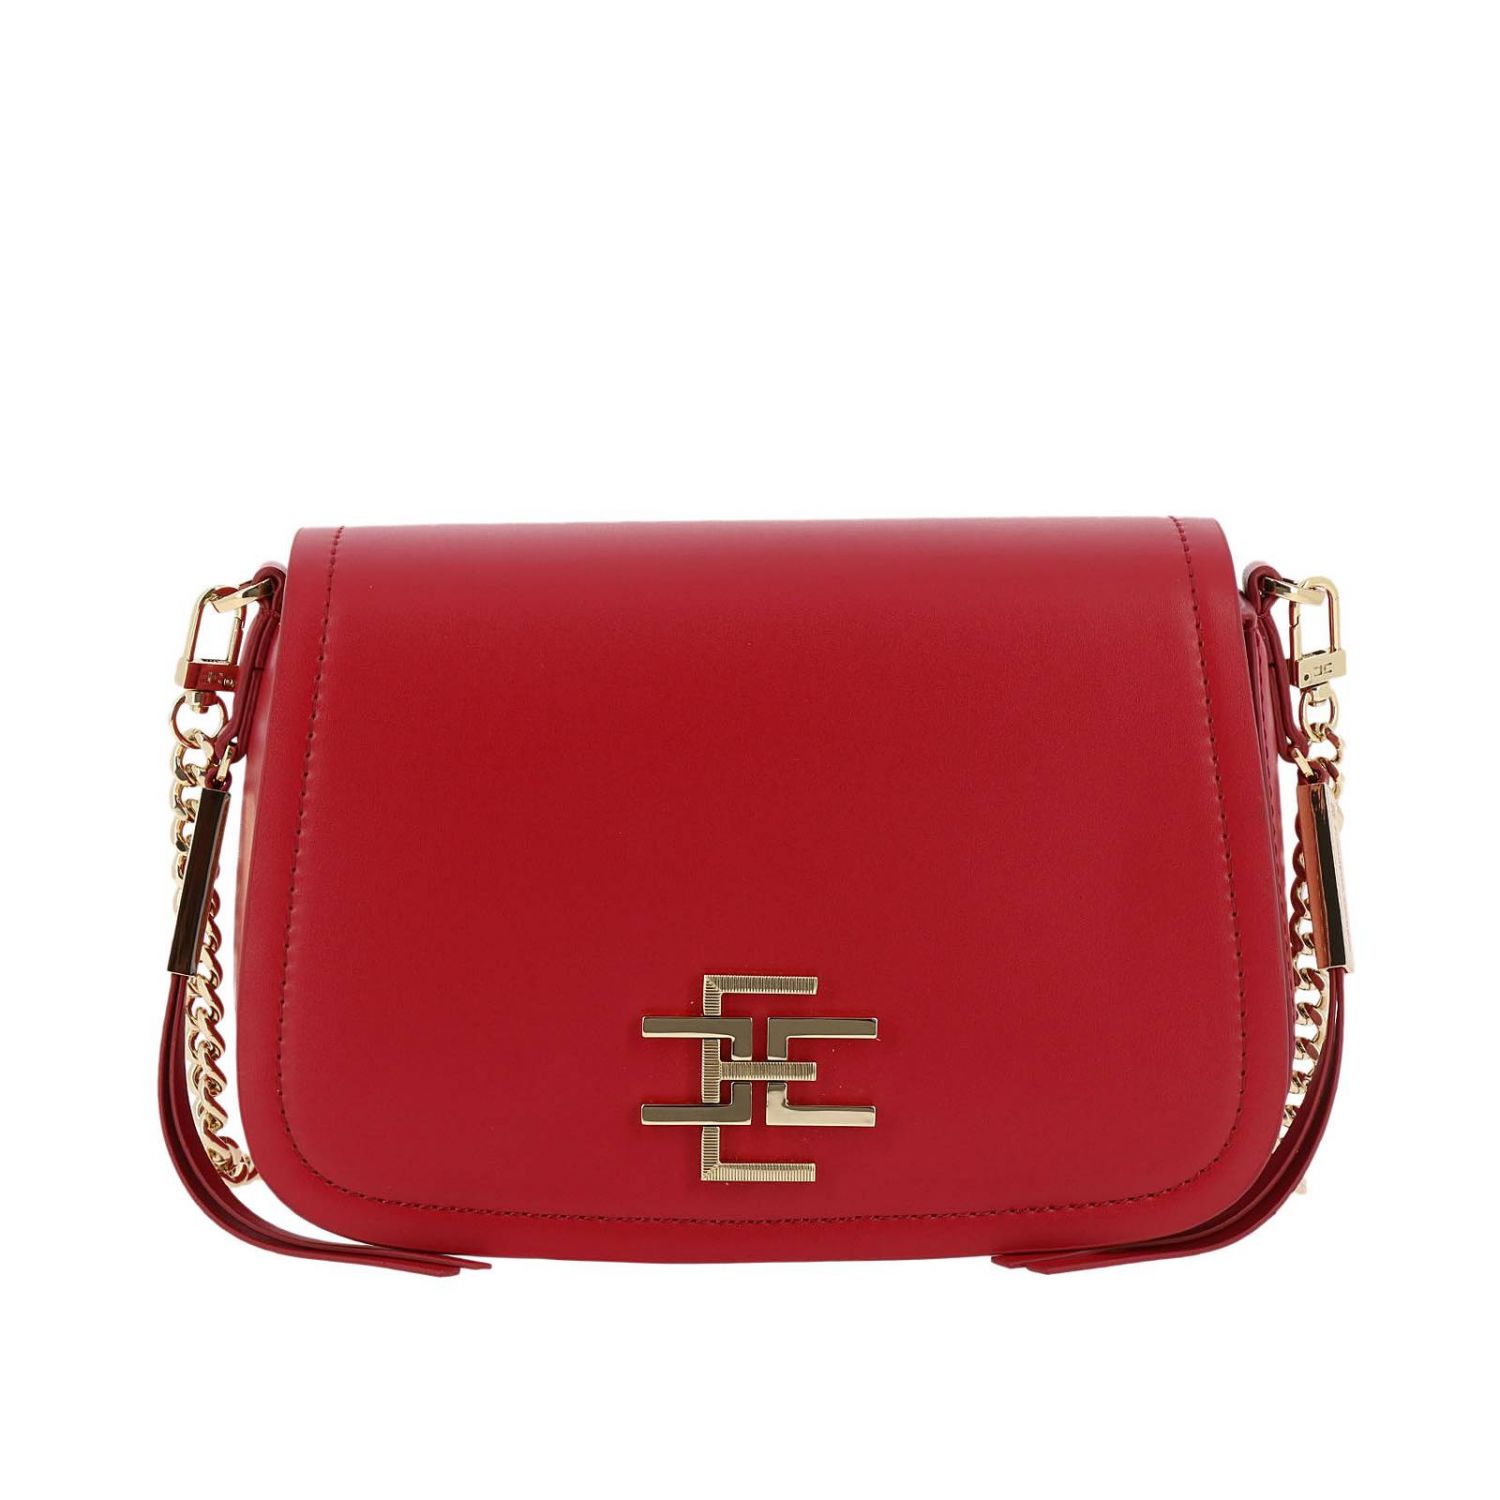 Elisabetta Franchi Outlet: handbag for woman - Raspberry | Elisabetta ...